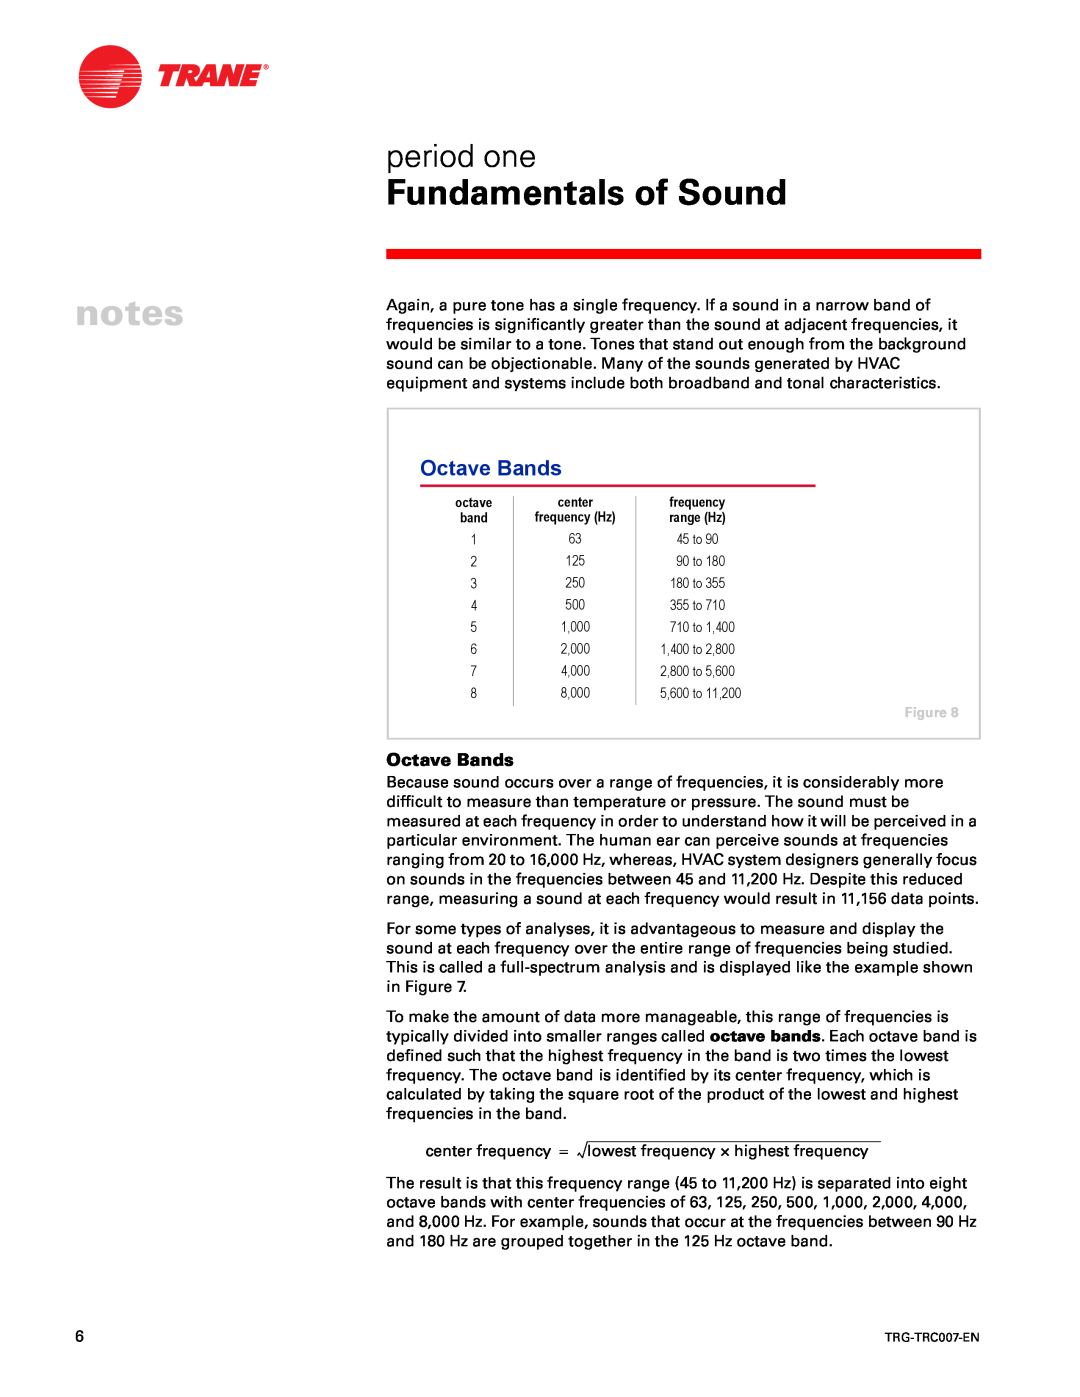 Trane TRG-TRC007-EN manual Octave Bands, Fundamentals of Sound, period one 